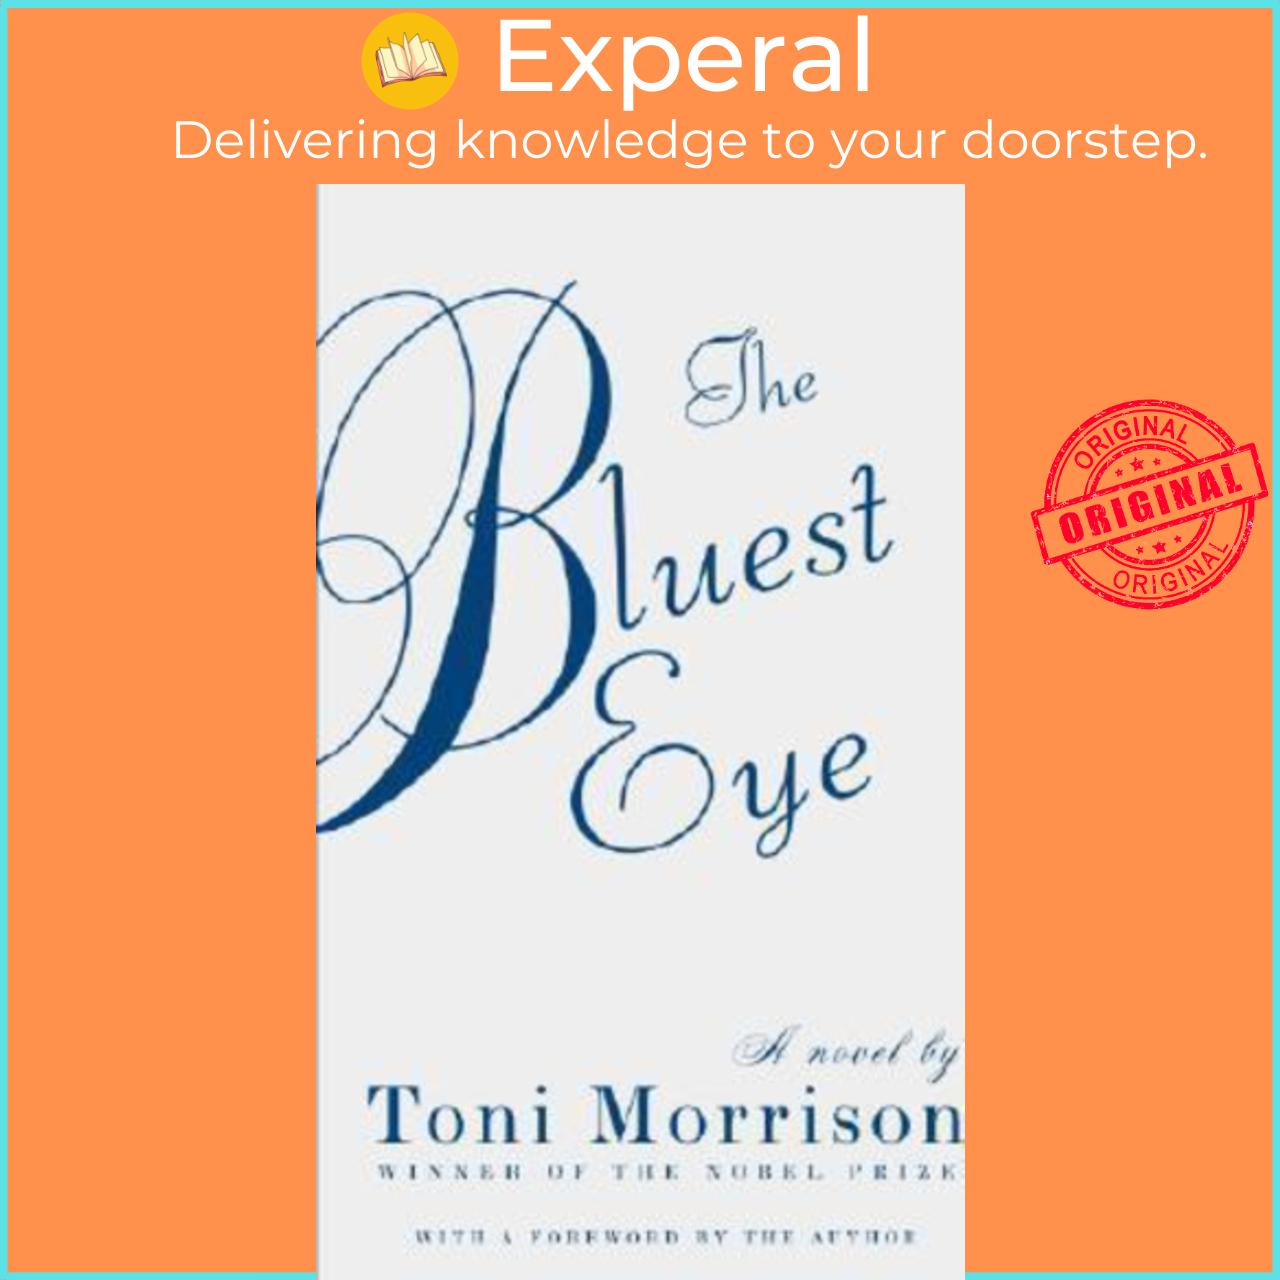 Sách - The Bluest Eye by Toni Morrison (US edition, paperback)